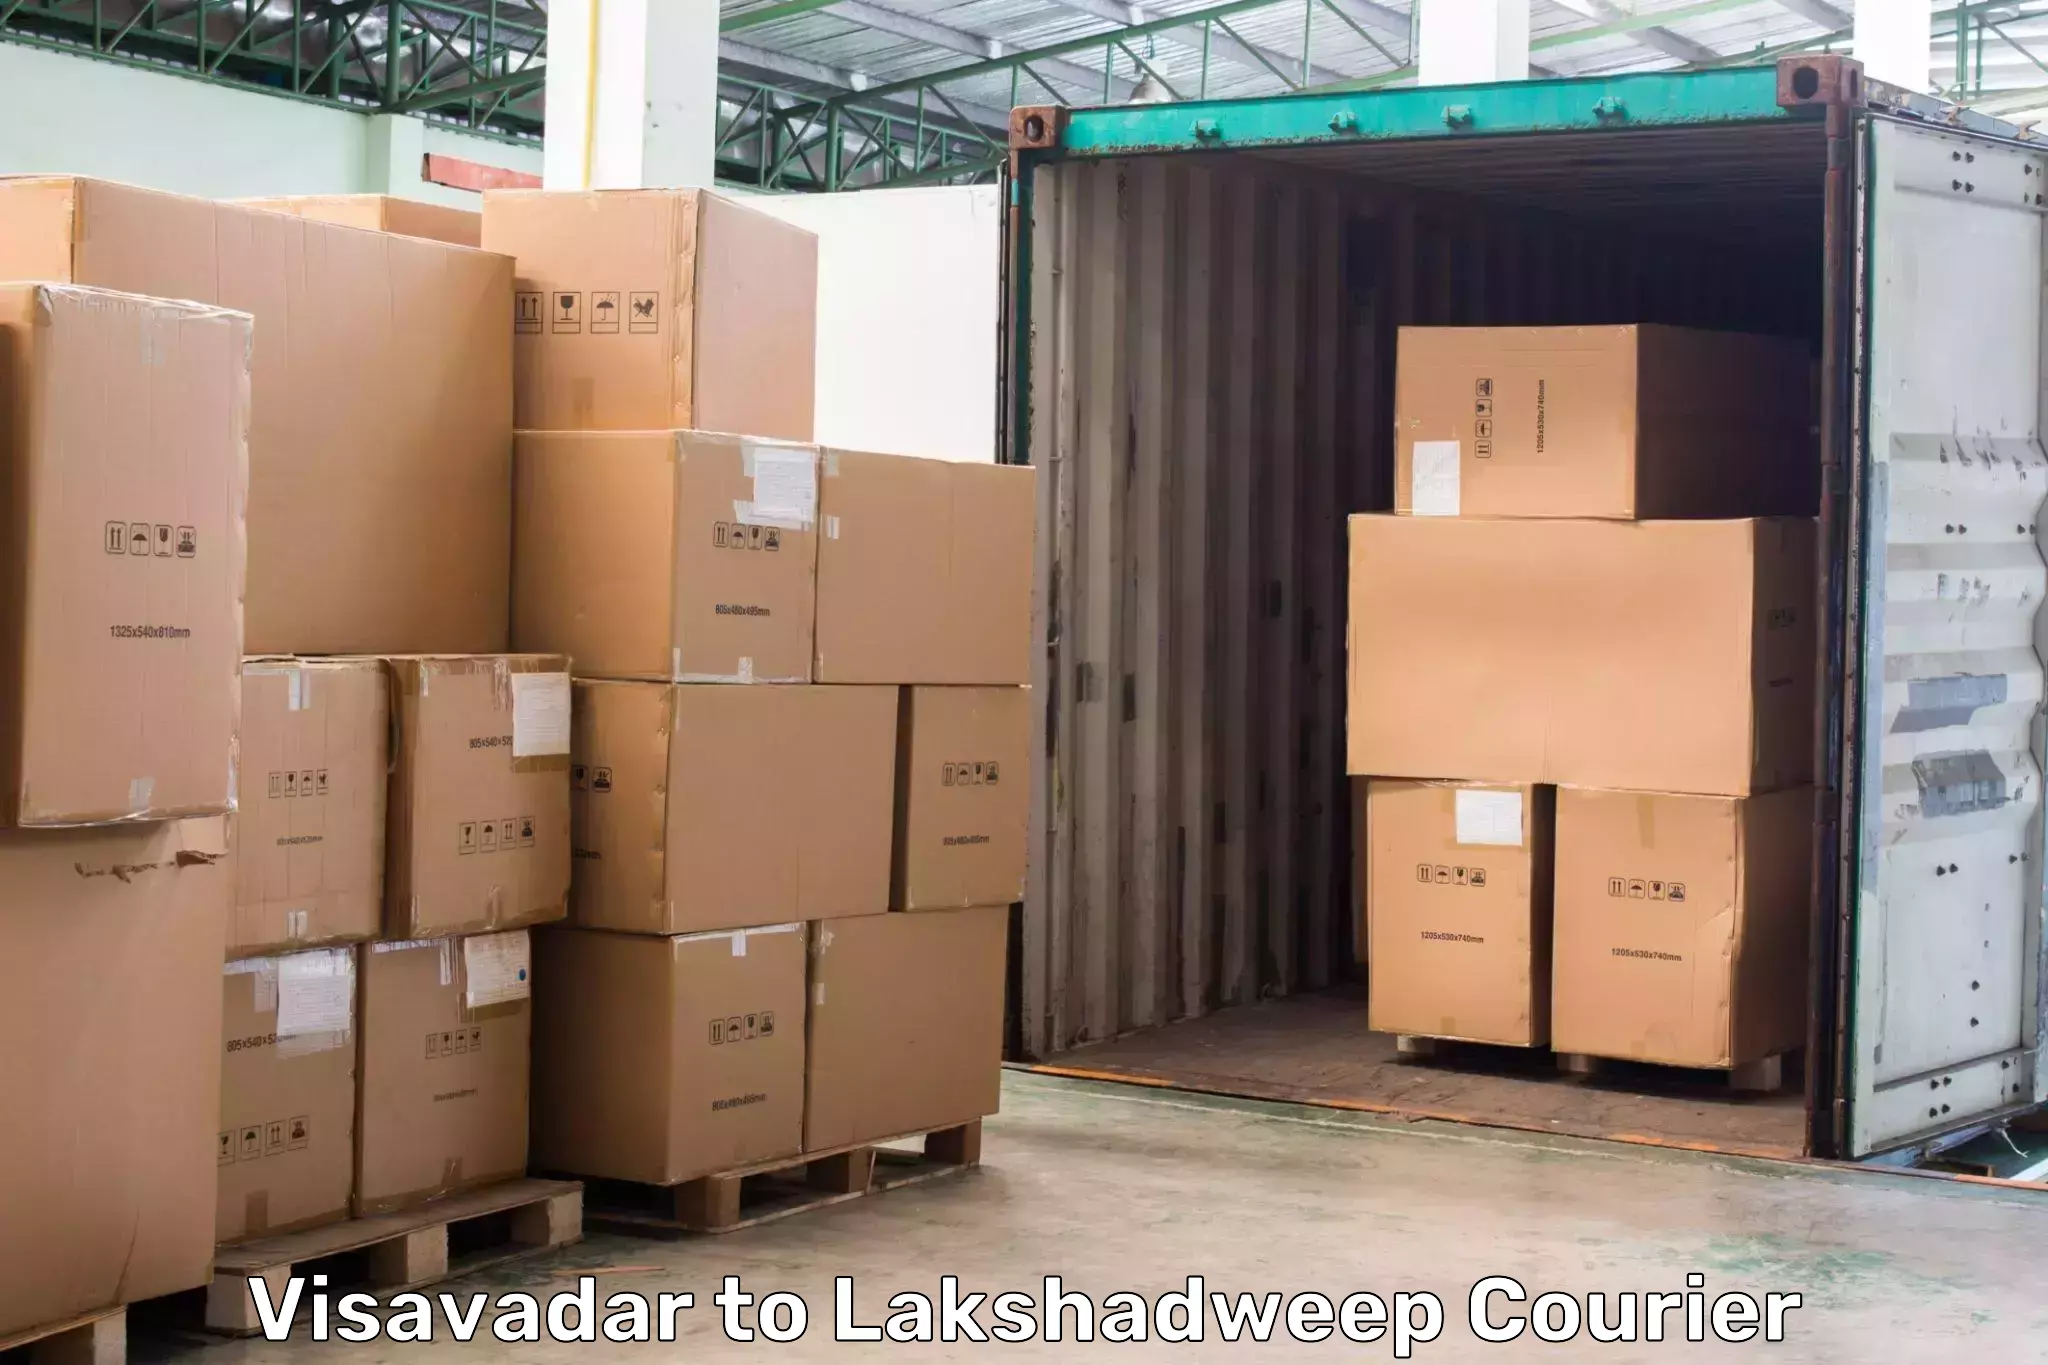 Express delivery network Visavadar to Lakshadweep